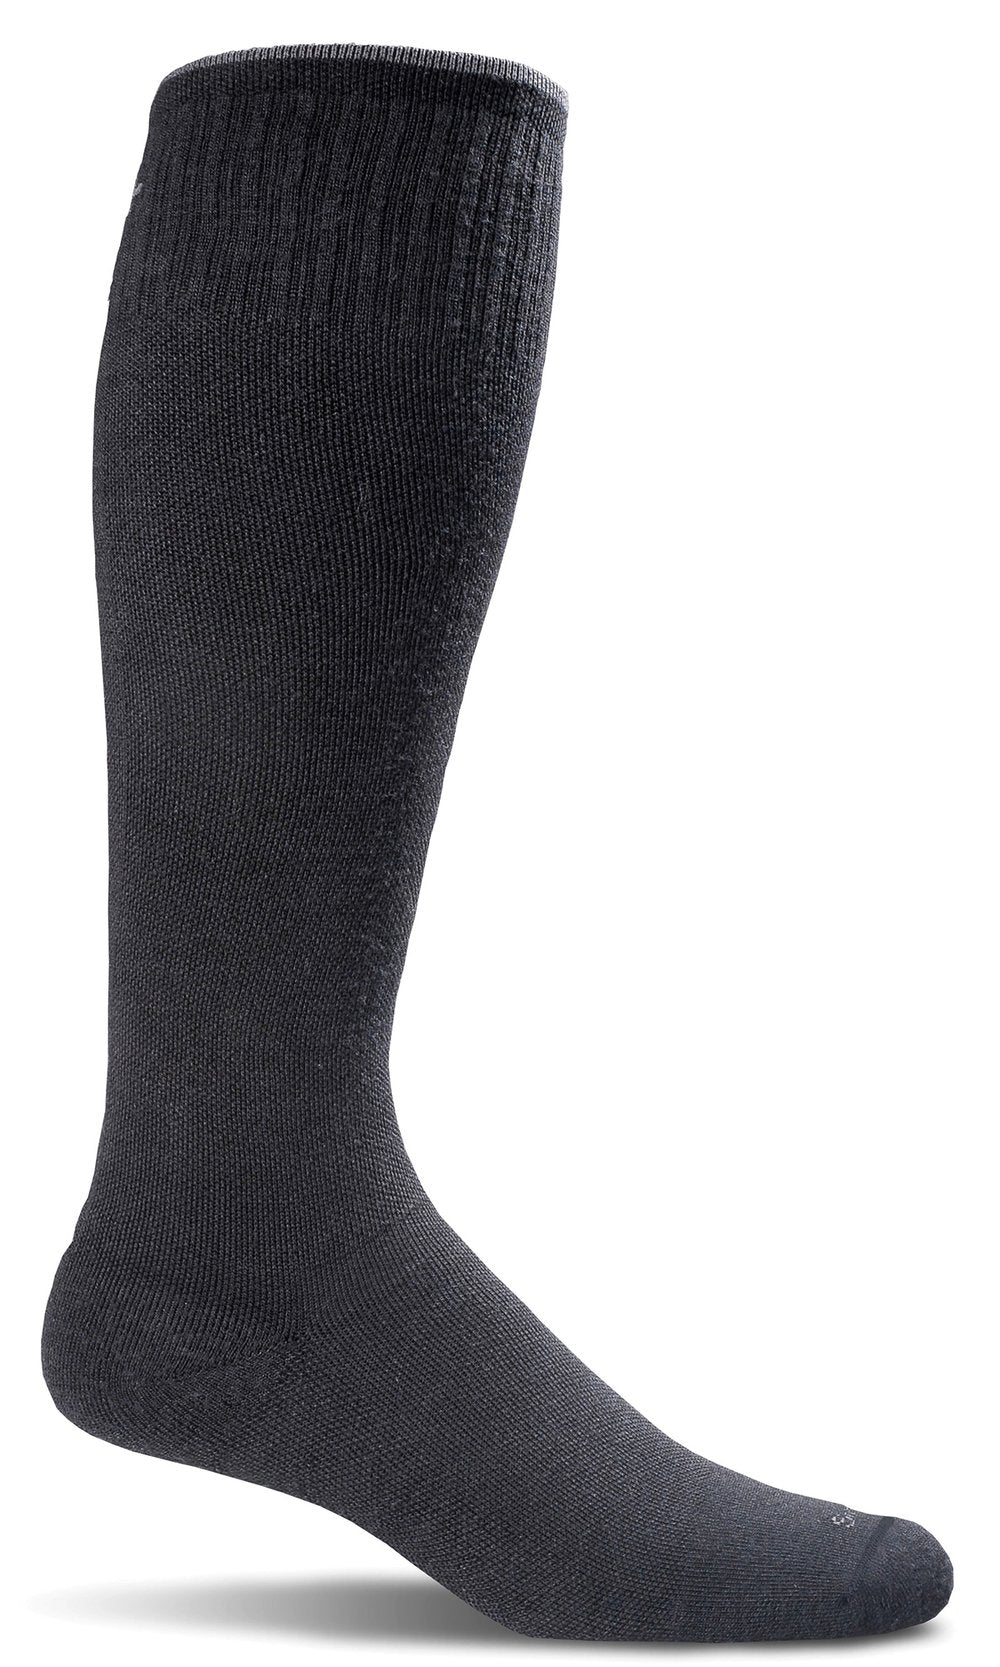 Black Graduated Compression Sock (Men's size scale)